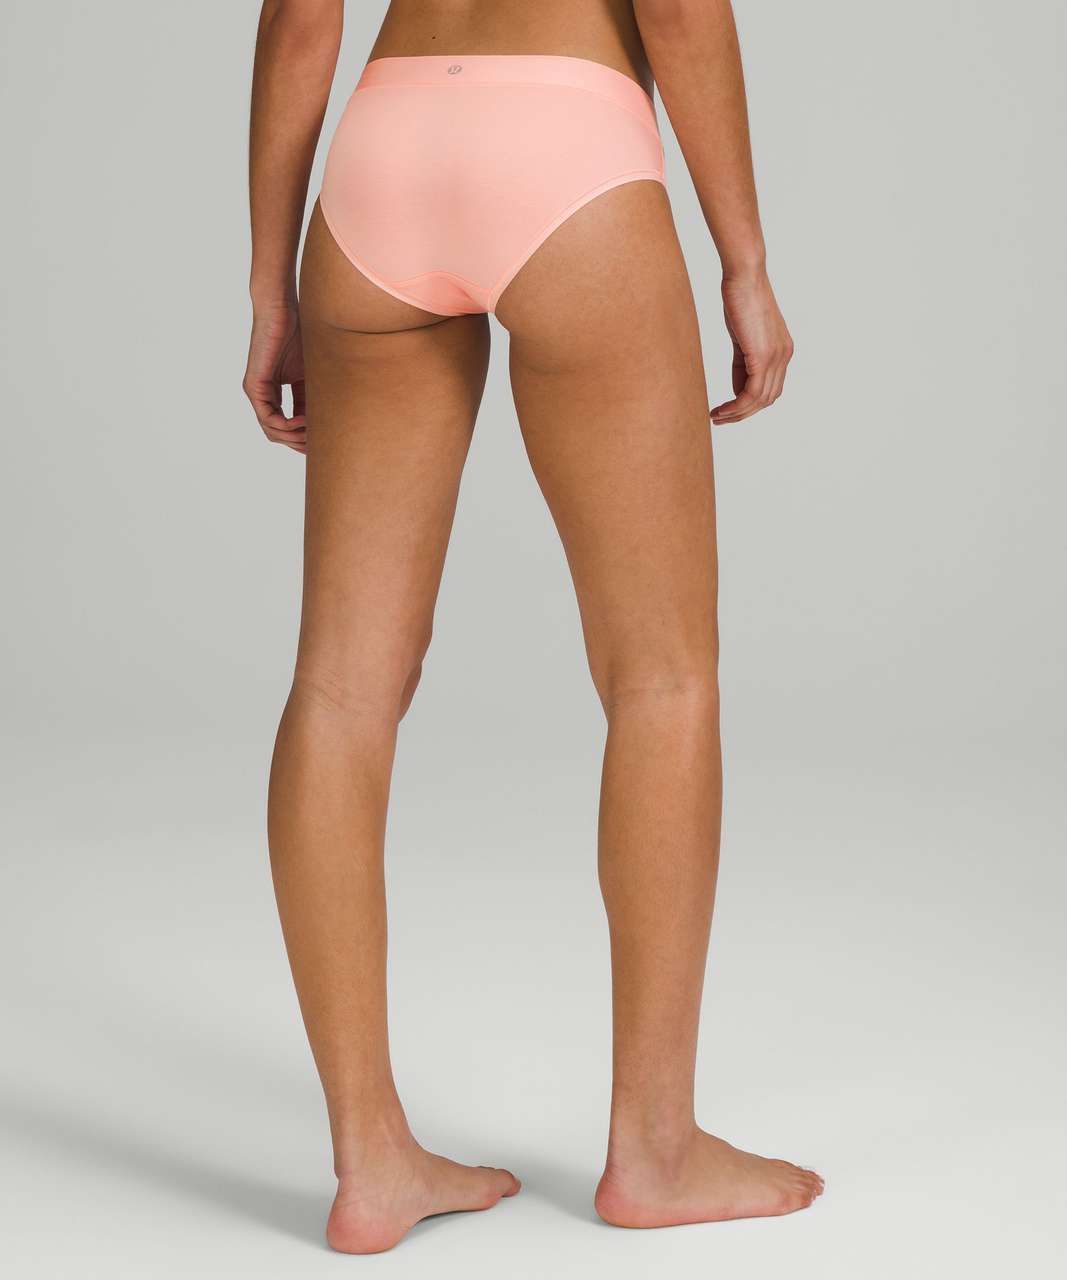 Lululemon UnderEase Mid-Rise Bikini Underwear 3 Pack - Black / Dew Pink / Intertwined Camo Deep Coal Multi